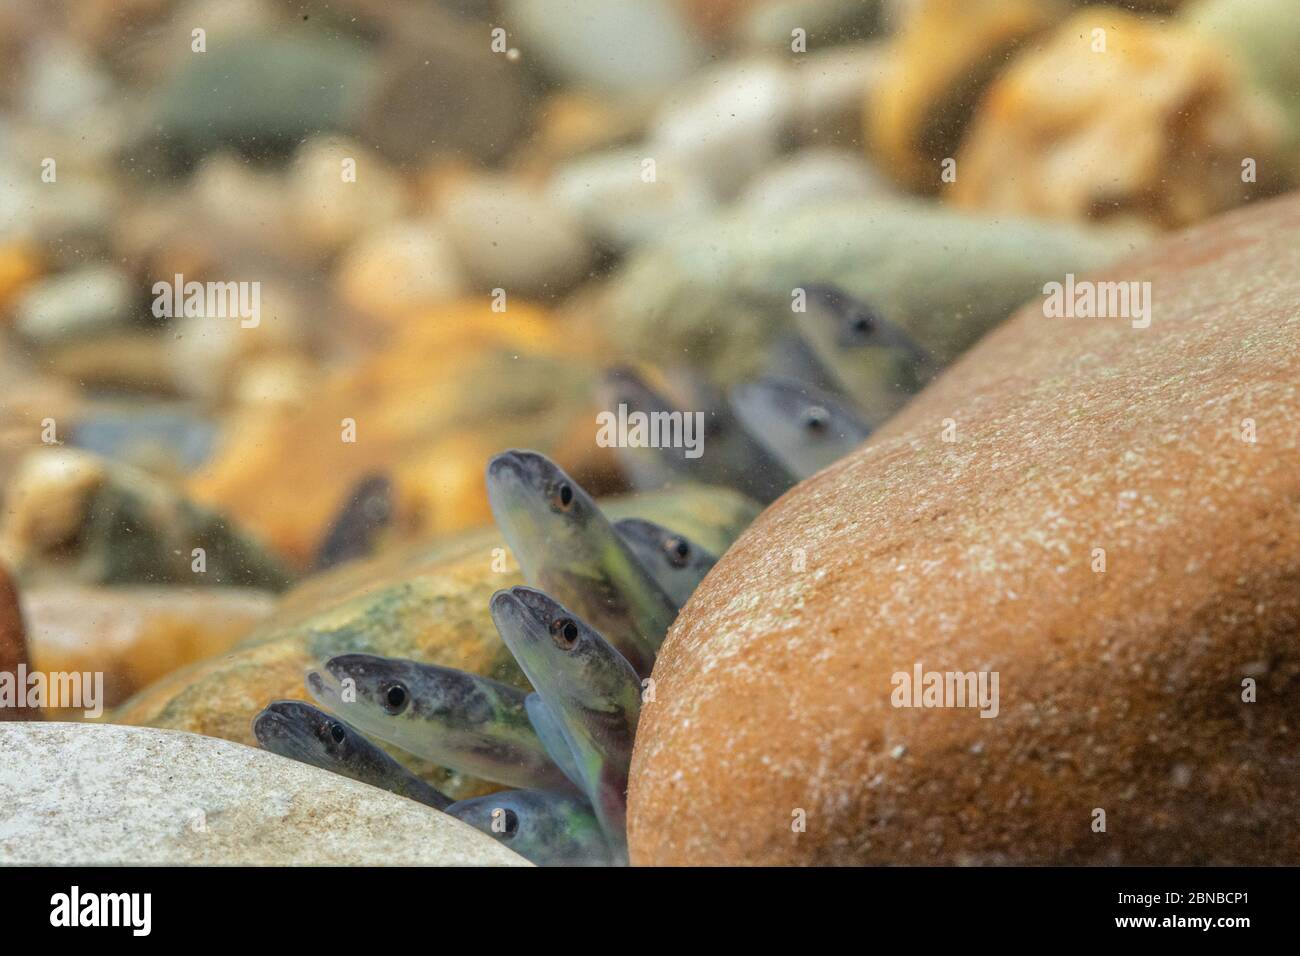 eel, European eel, river eel (Anguilla anguilla), some glass eels on the bottom, Germany Stock Photo